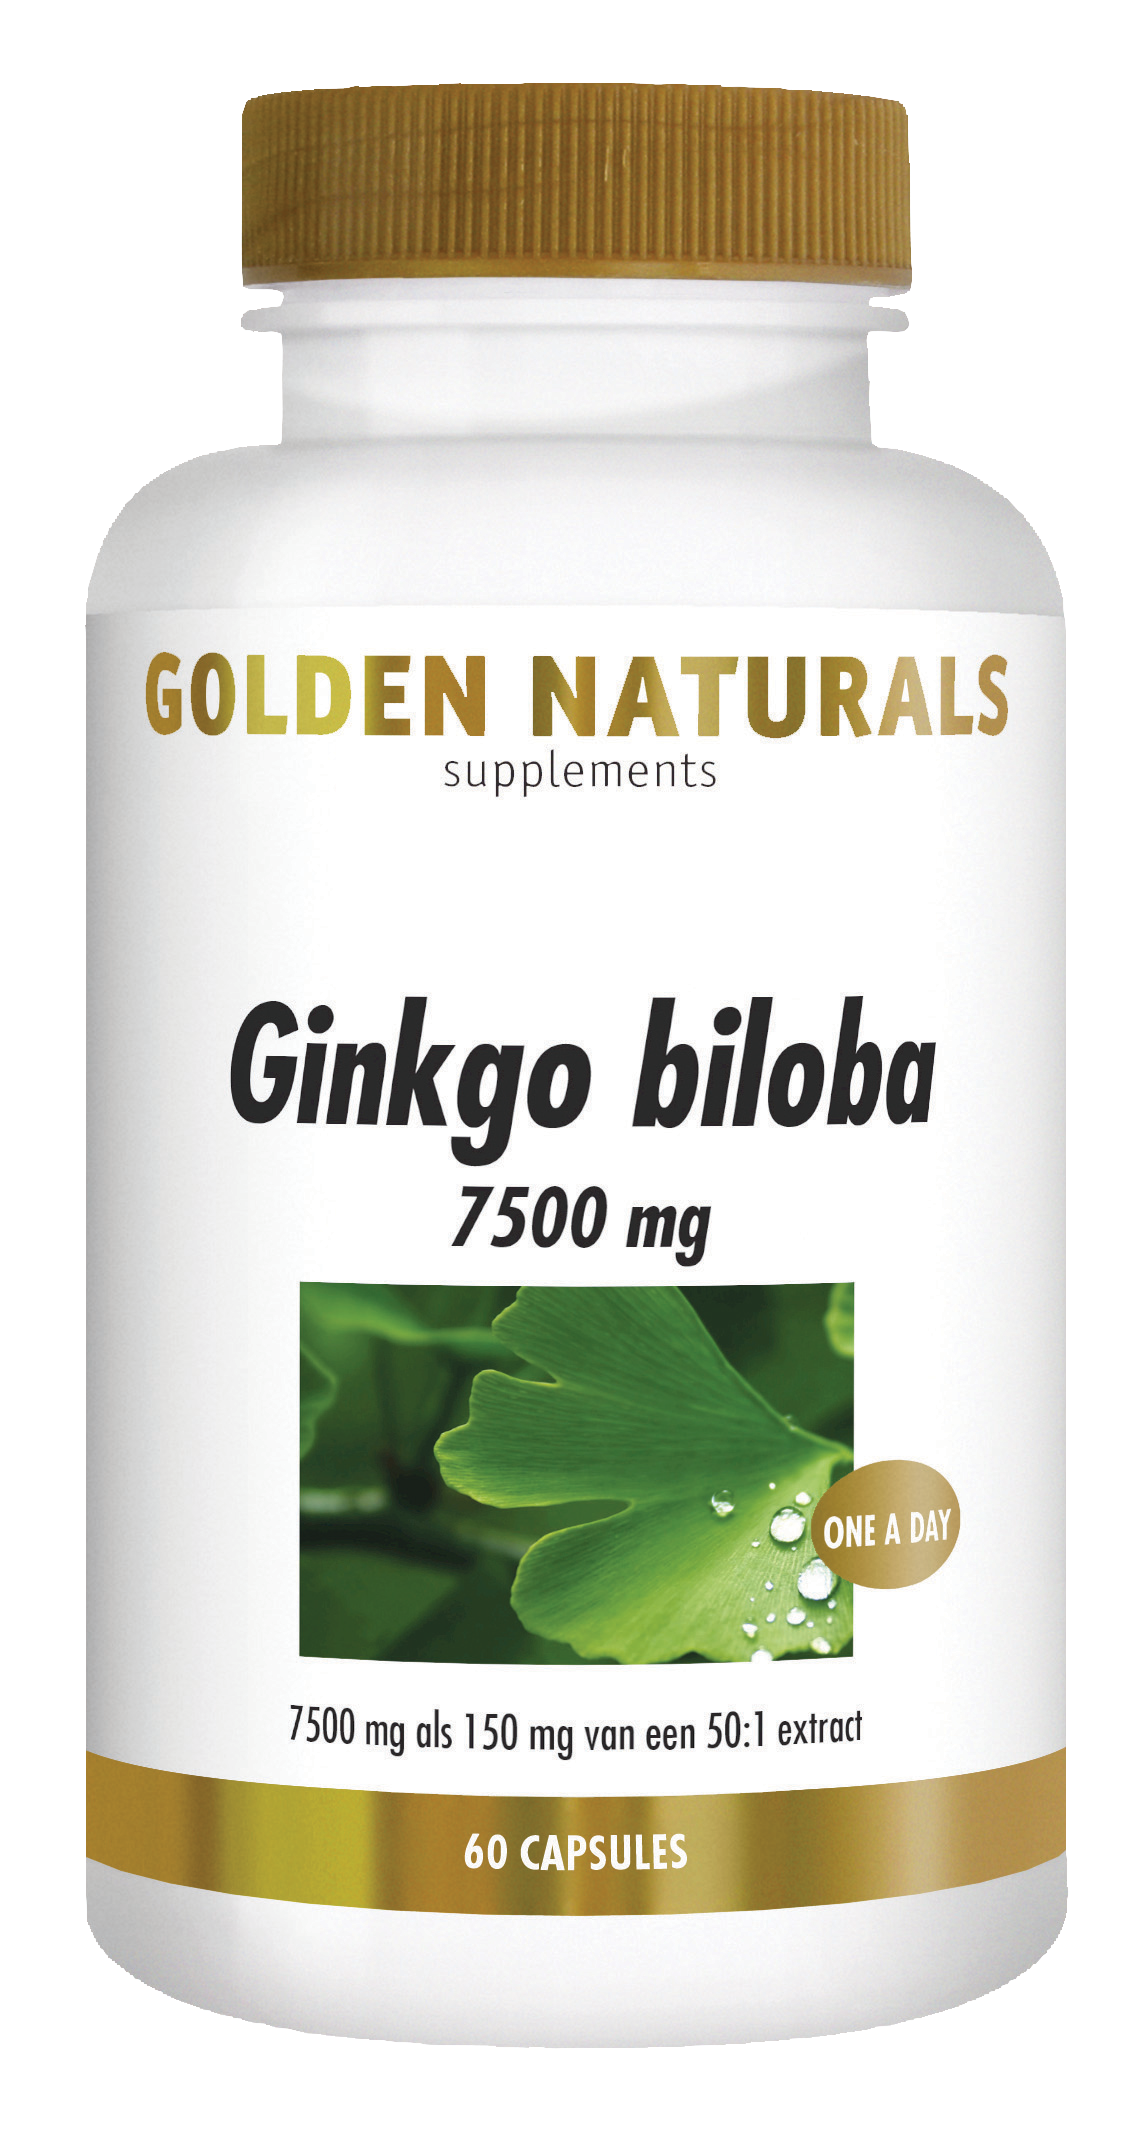 Golden Naturals Ginkgo Biloba 7500 mg (60 veganistische capsules)